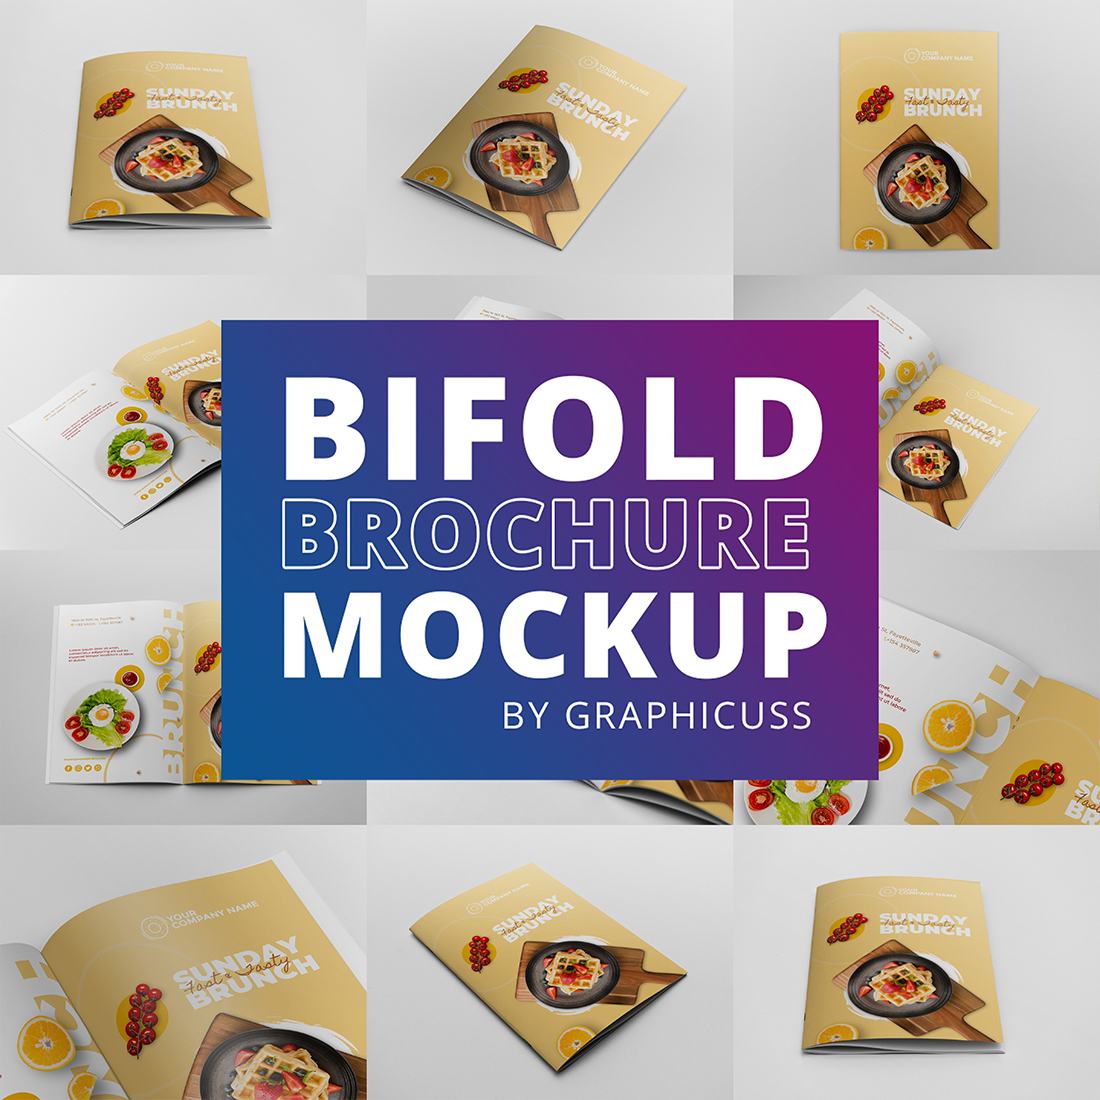 A4 Bifold Brochure Mockup 5 cover image.